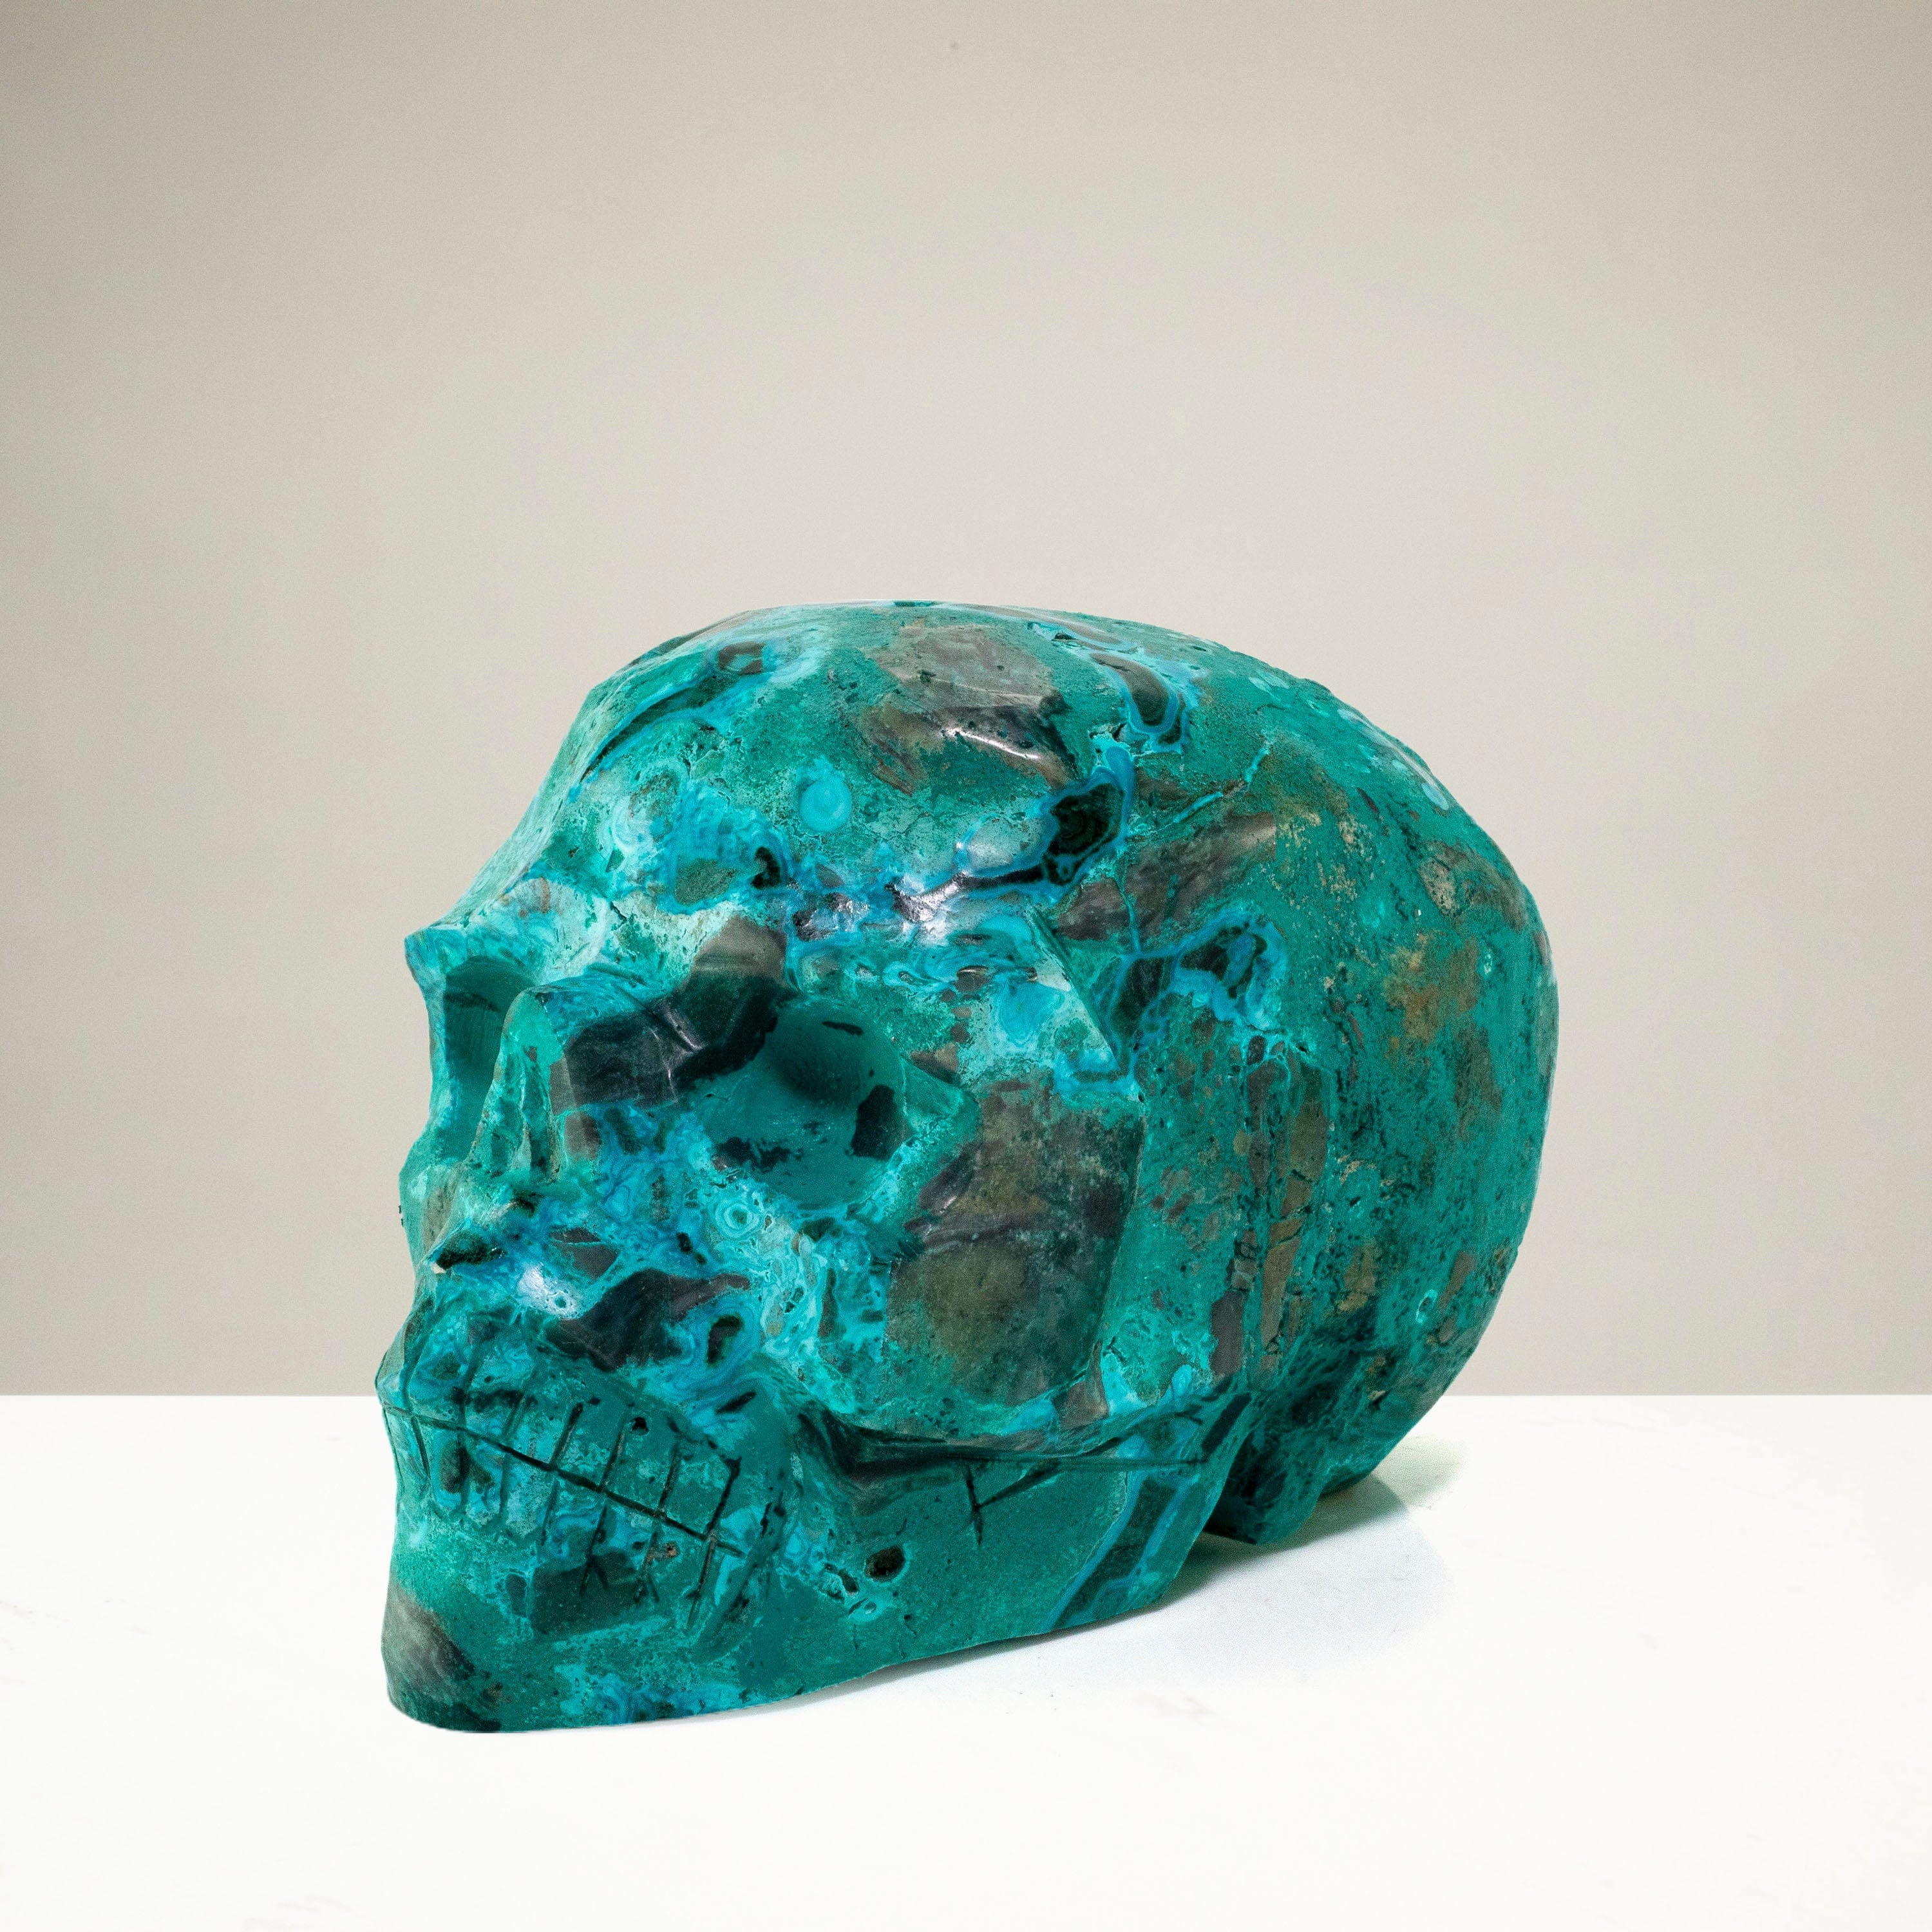 Kalifano Malachite Chrysocolla Skull Carving 5" / 1,350g SK4800-CRY.001